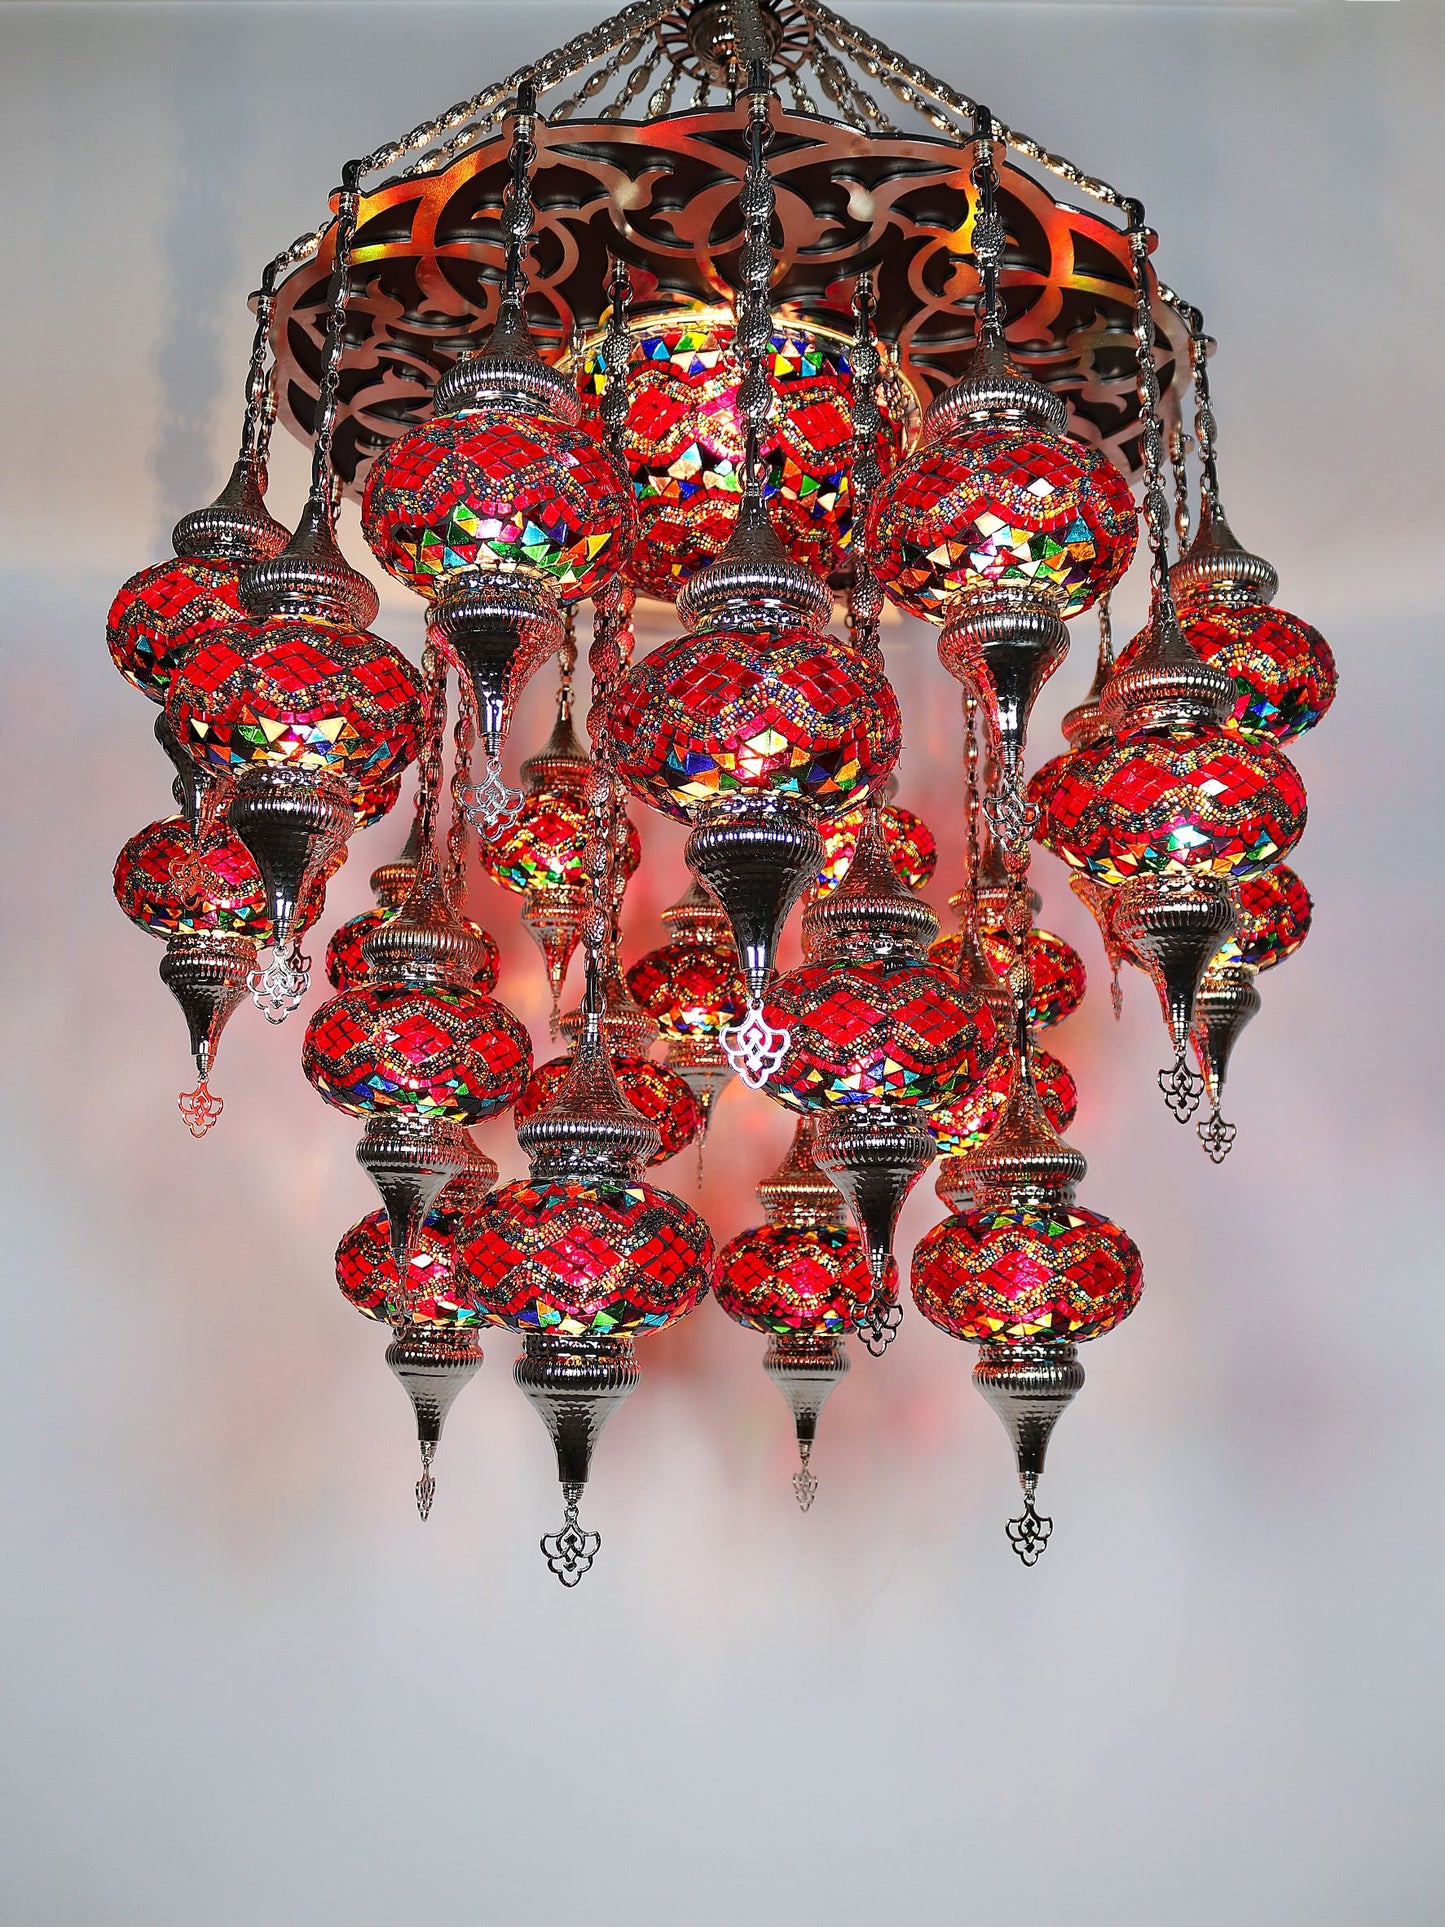 Turkish mosaic chandelier hand made mosaic pendant lighting 24 globe.